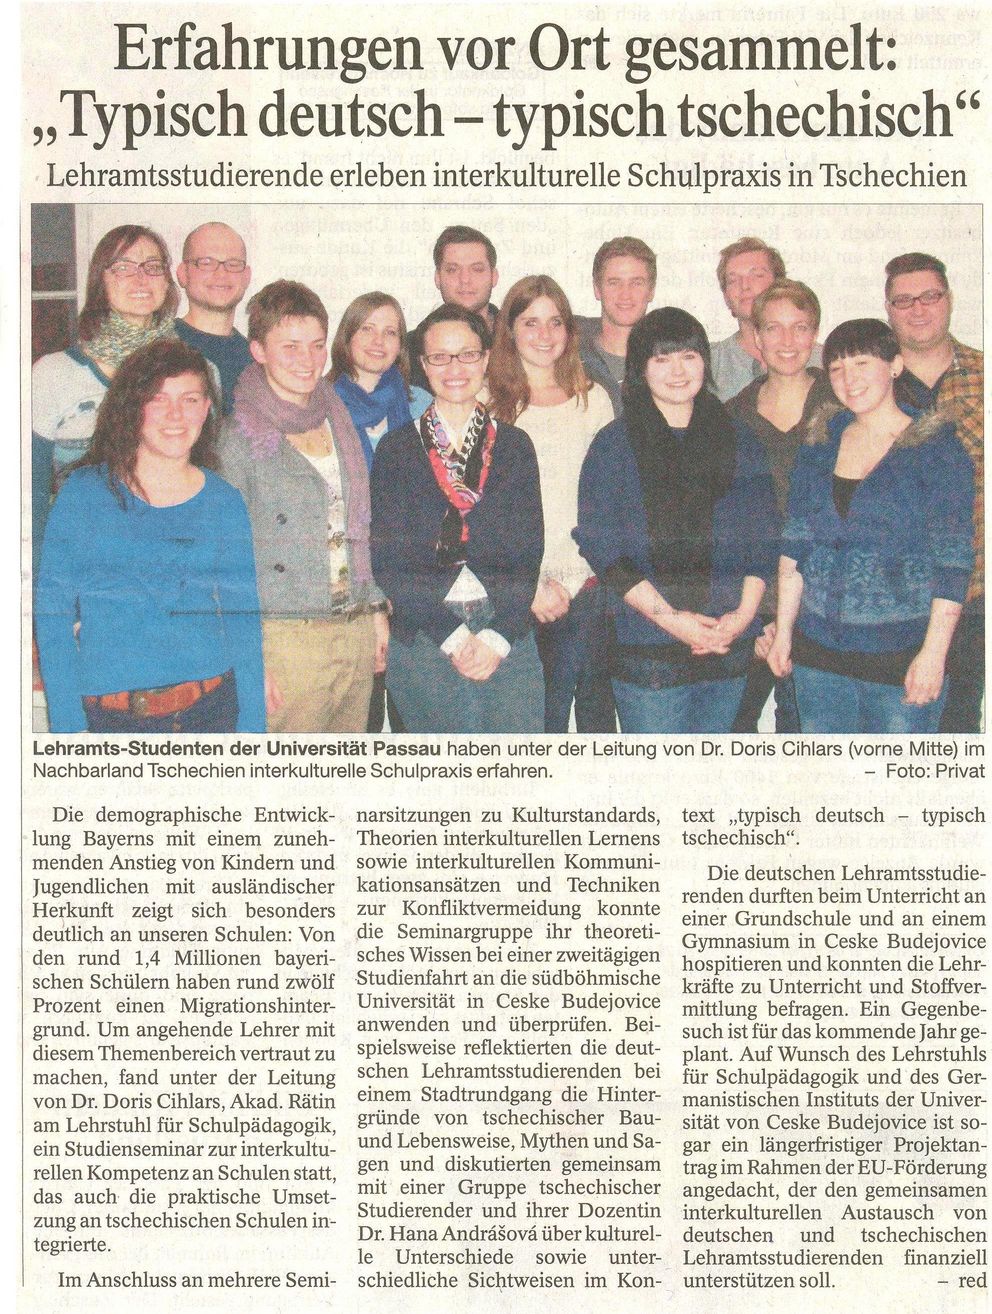 Scholarship recipients and sponsors of the Deutschlandstipendium national scholarship fund (for academic year 2011)